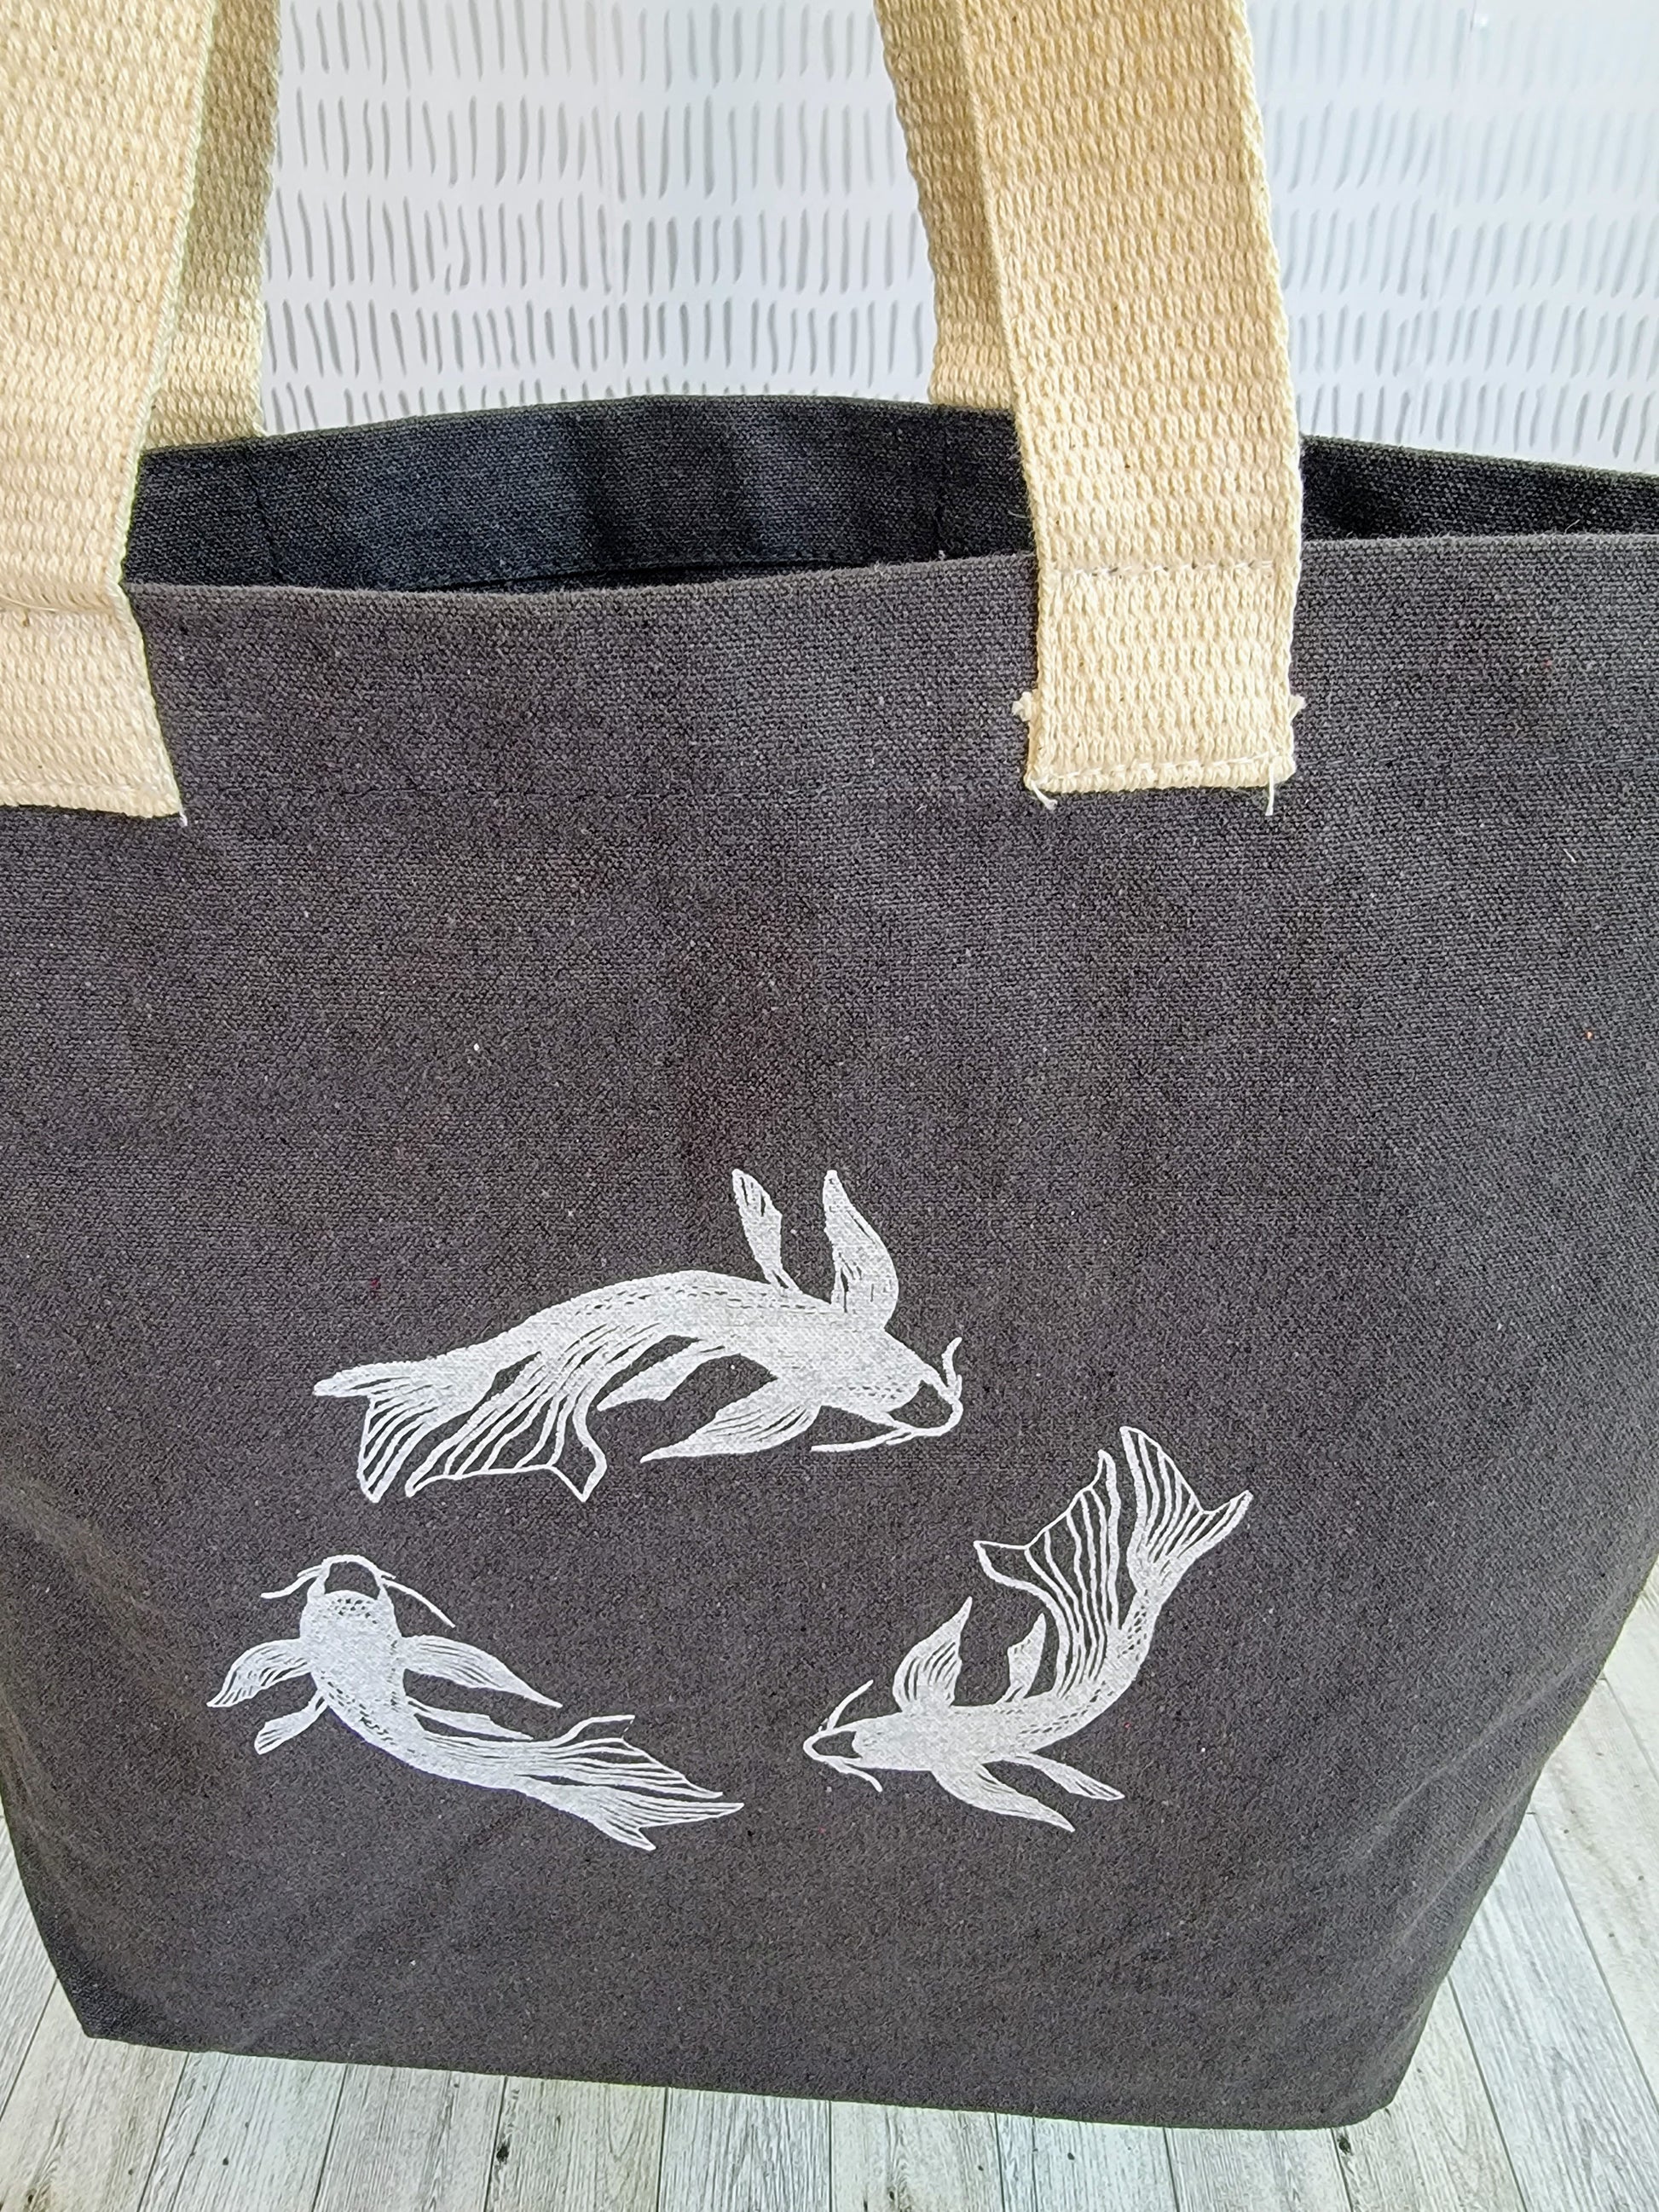 Koi Fish Recycled Canvas Tote Bag - White on Dark Grey - Open Bag Shot